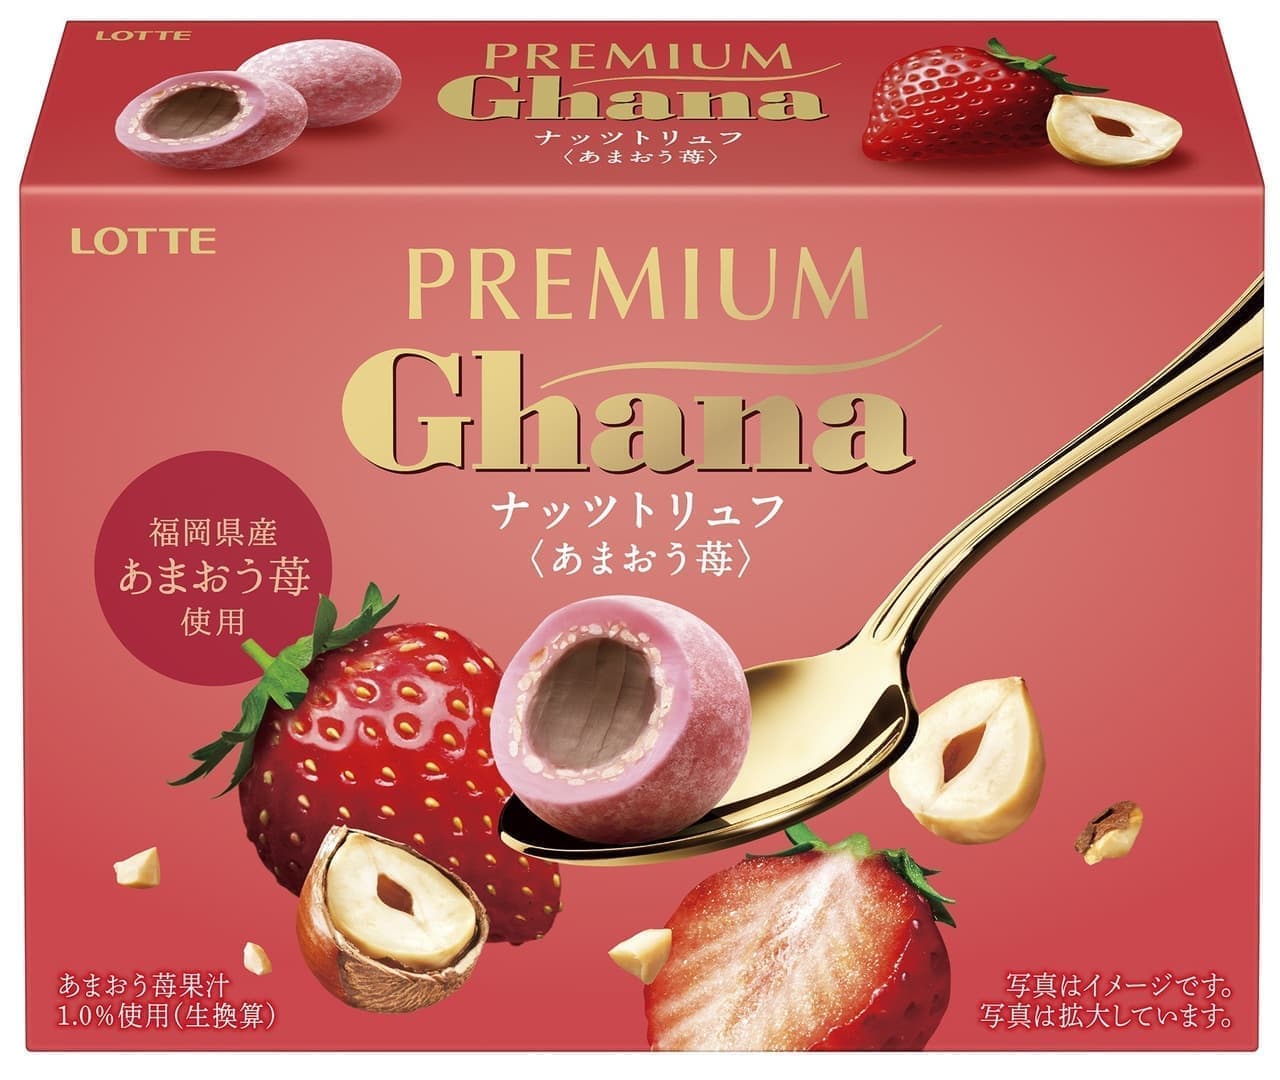 Lotte "Premium Ghana Nut Truffle [Amao Strawberry]".